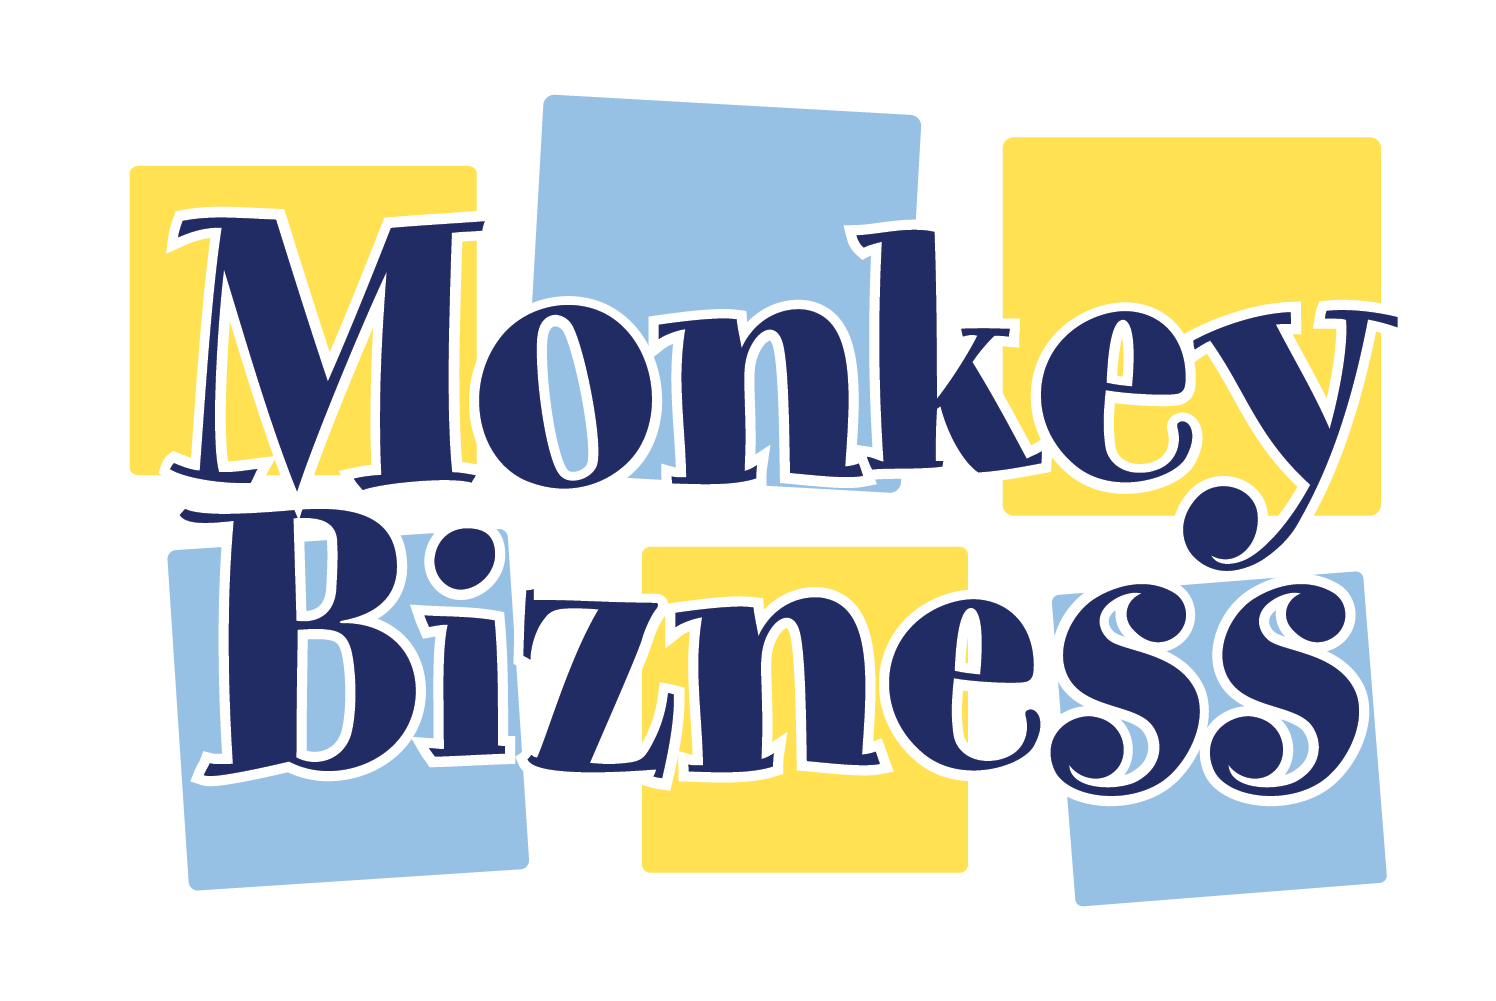 Little Monkey Bizness - Parker